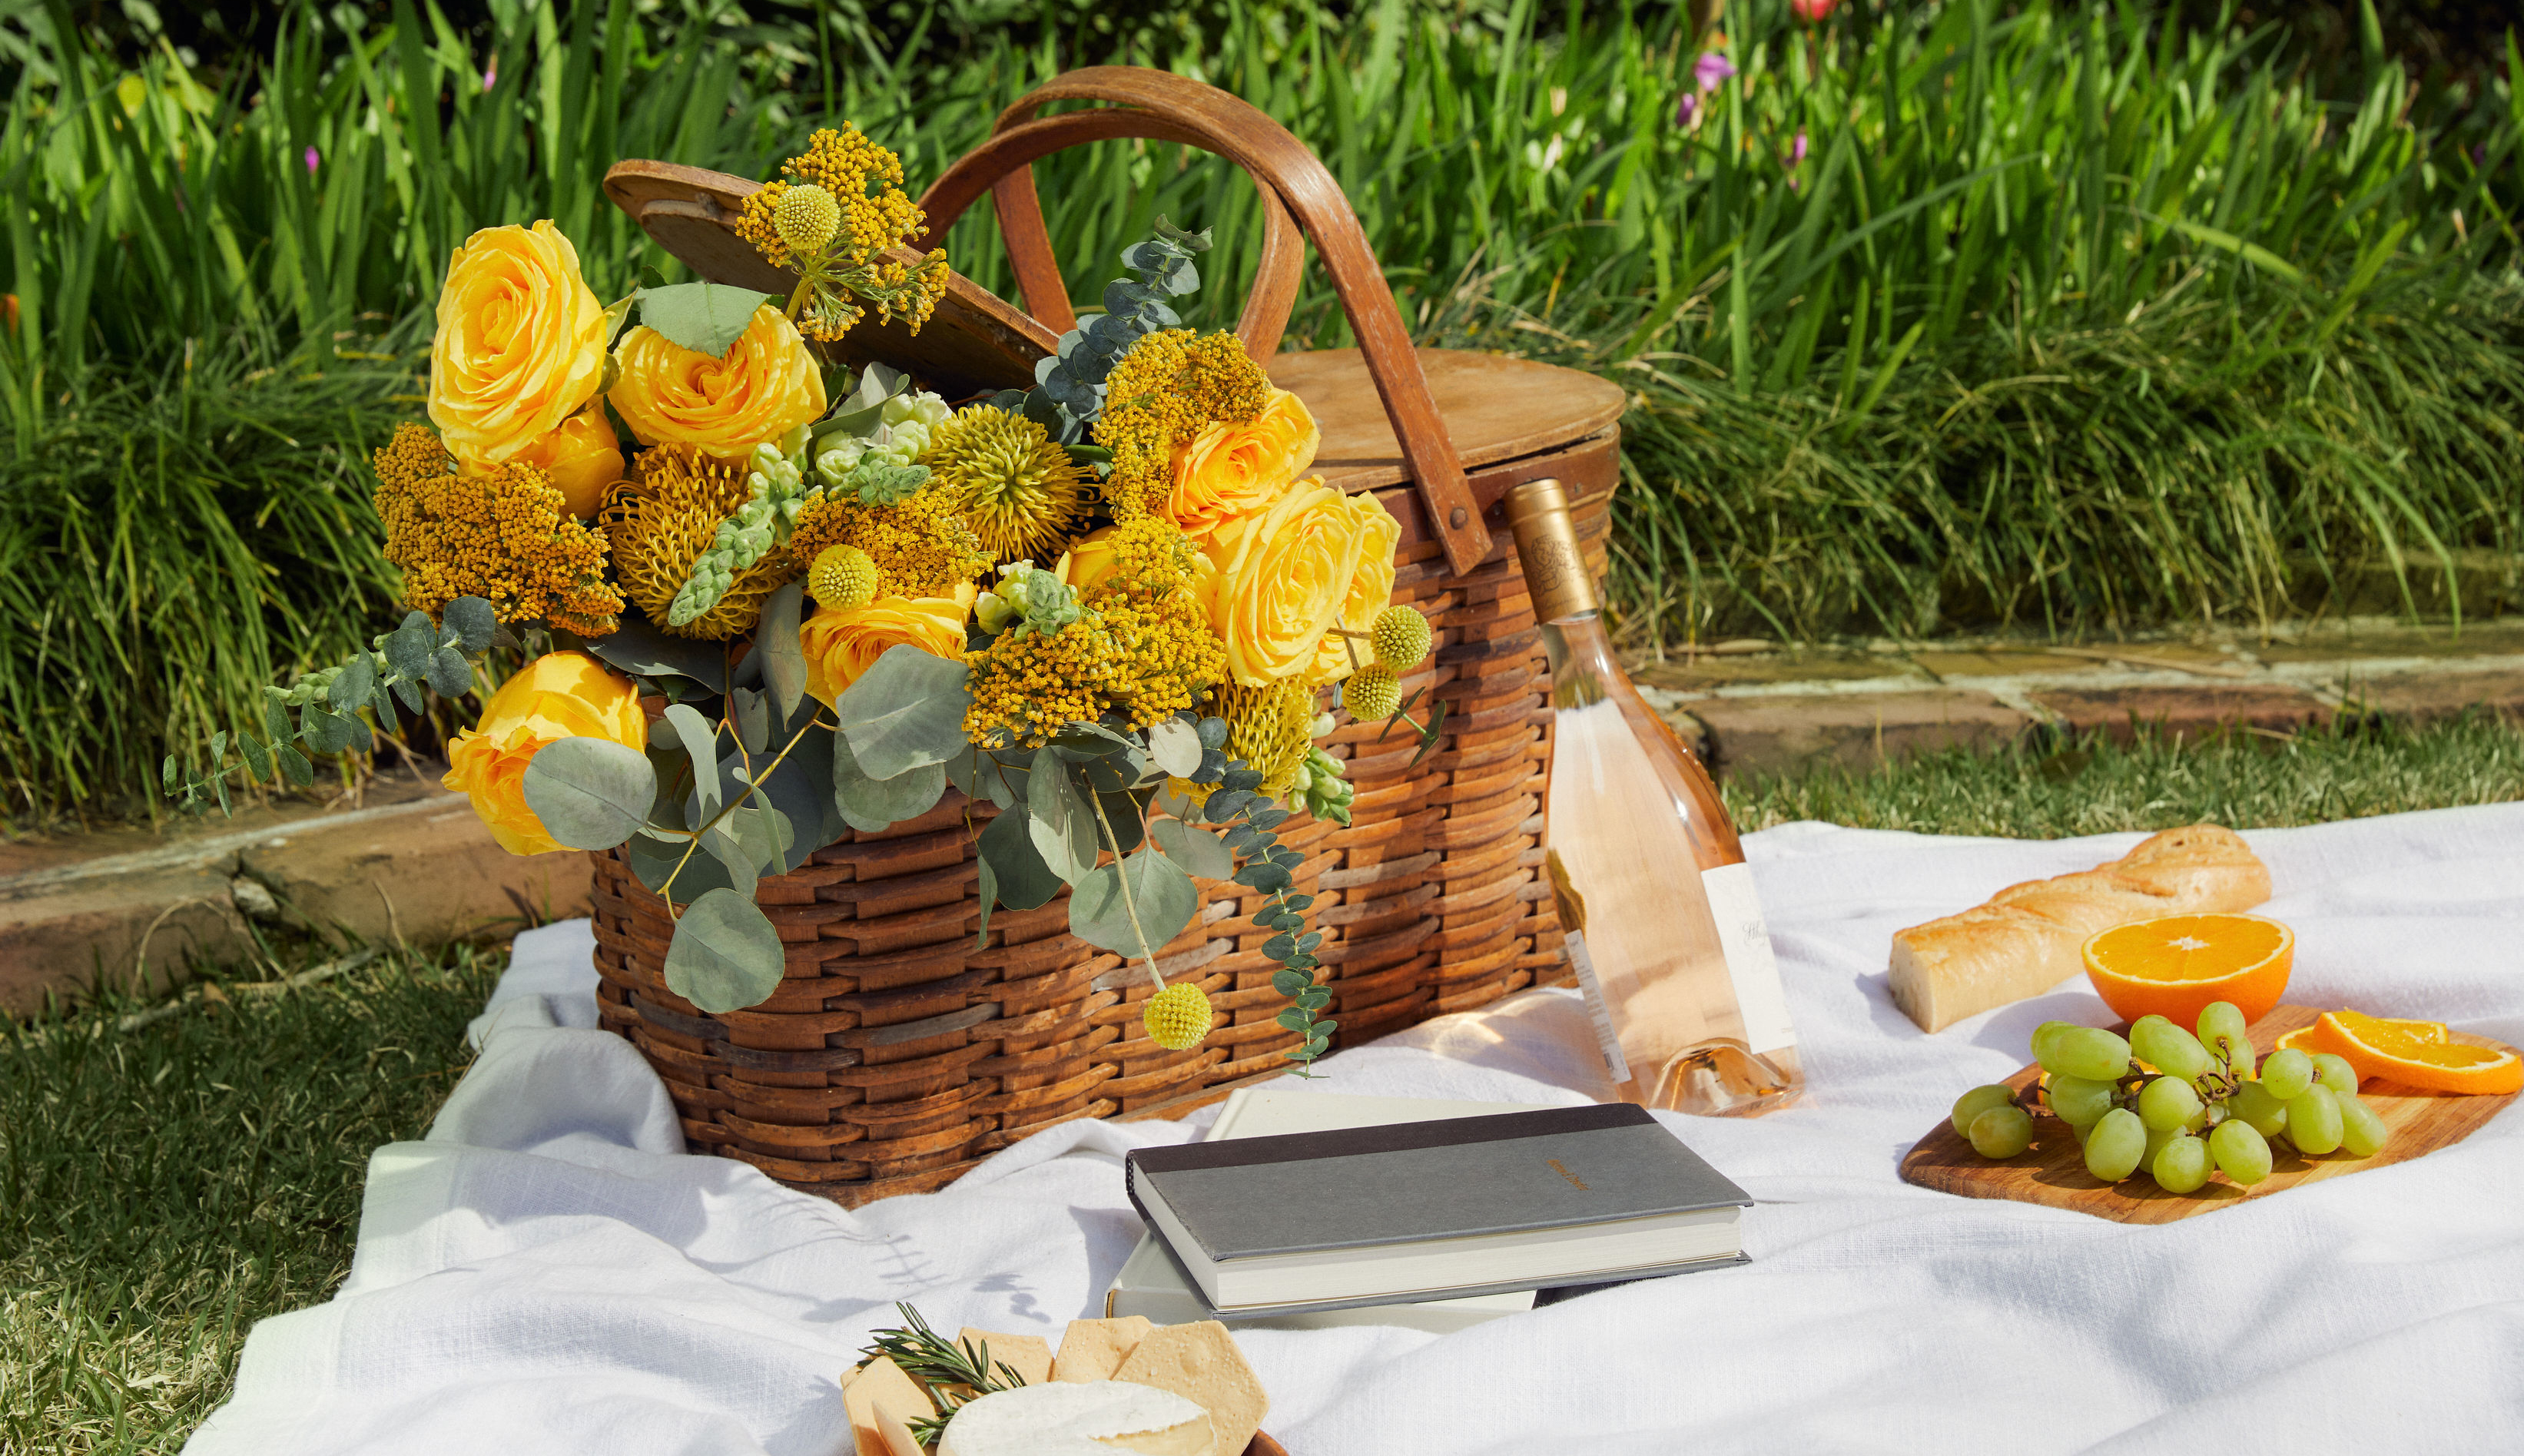 Picnic basket full of flowers outdoors